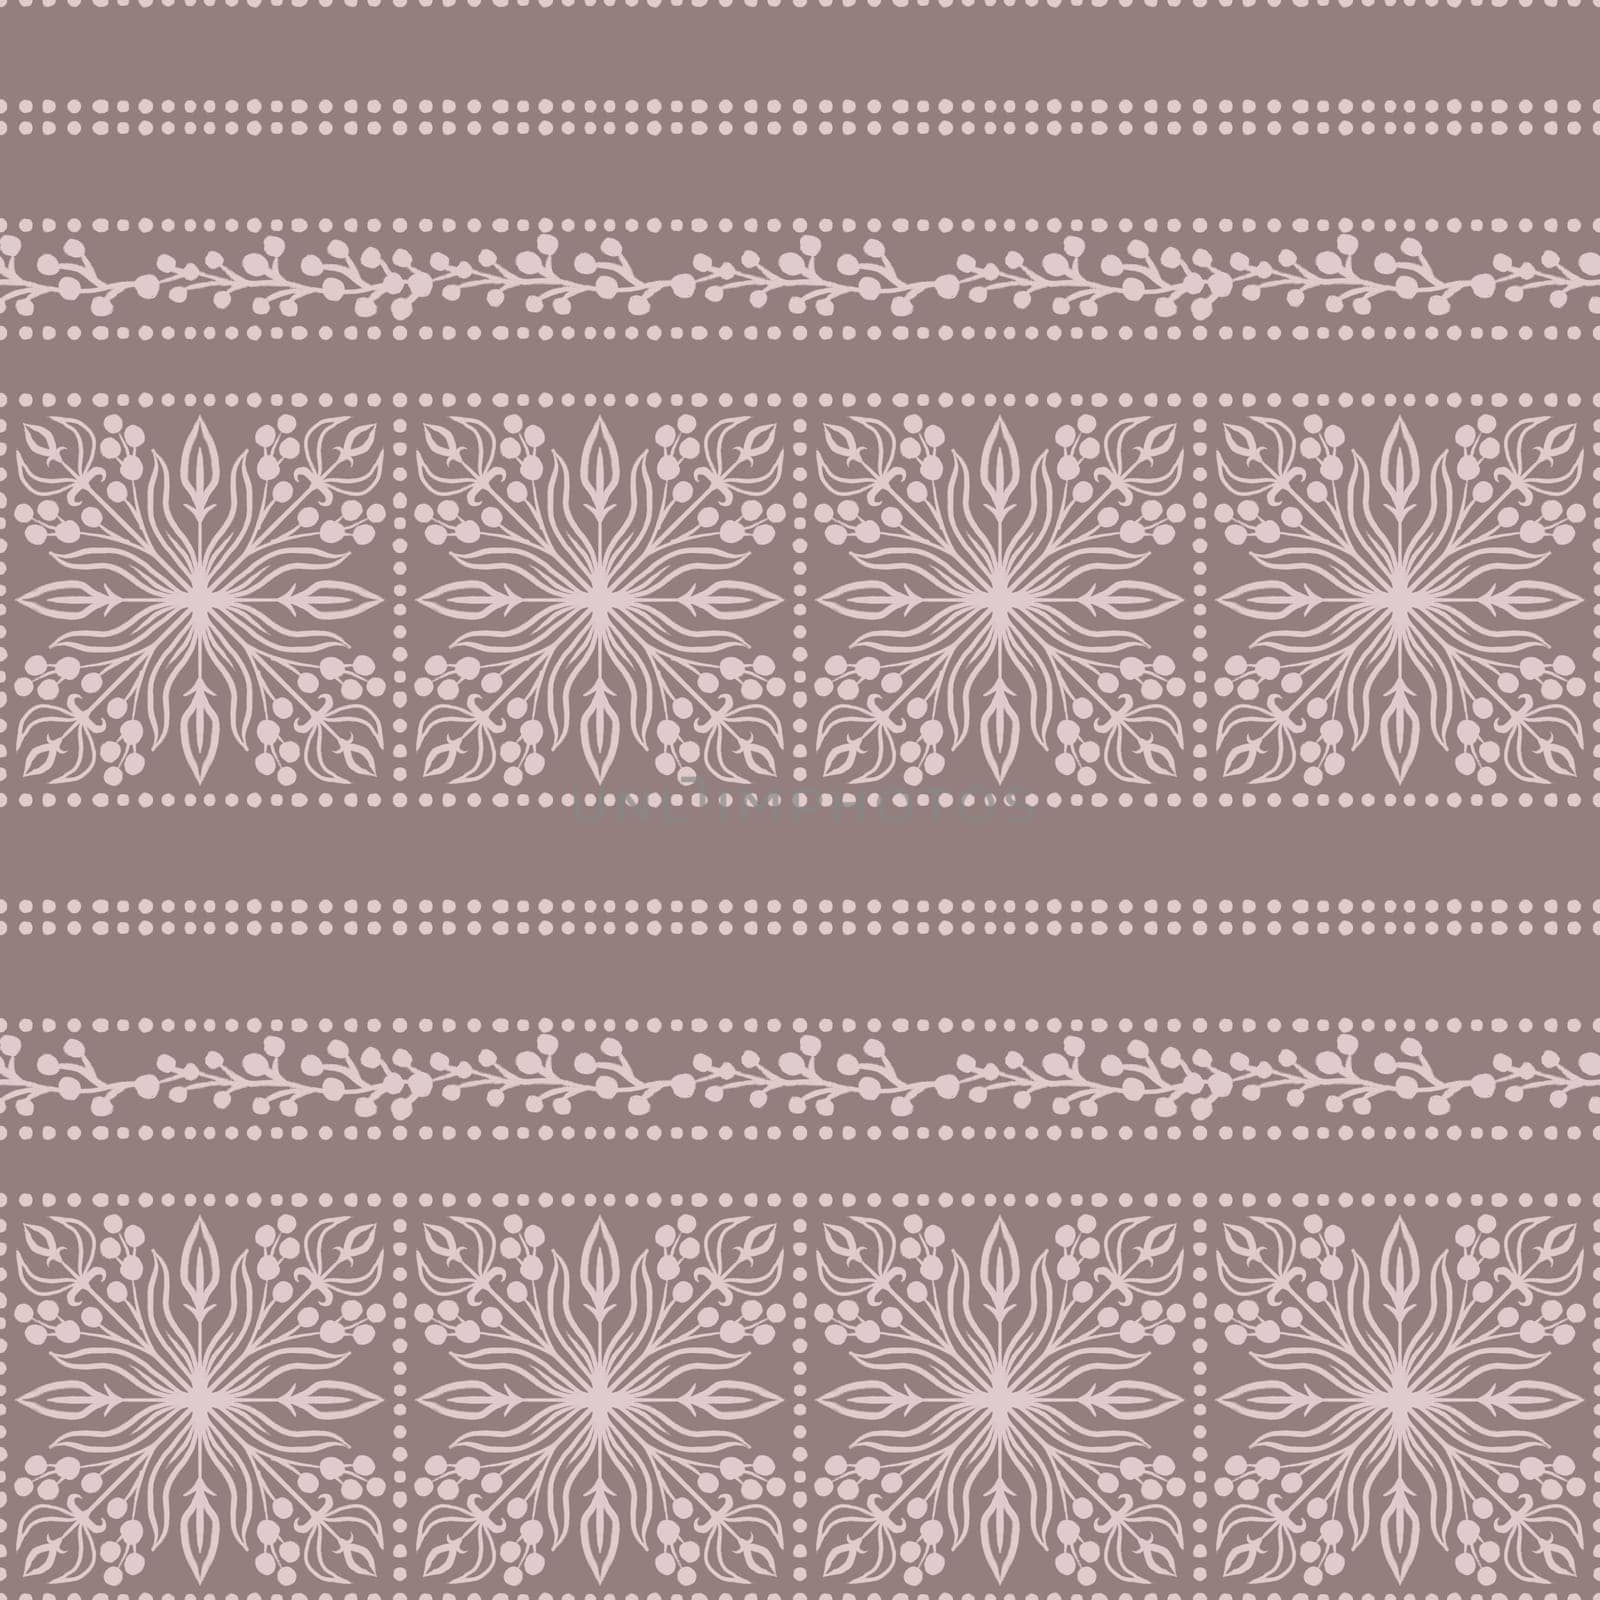 Hand drawn seamless pattern with bandana oriental ethnic elements beige grey background. Elegant pastekl leaves berries, traditional decorative headscarf western ornament. by Lagmar